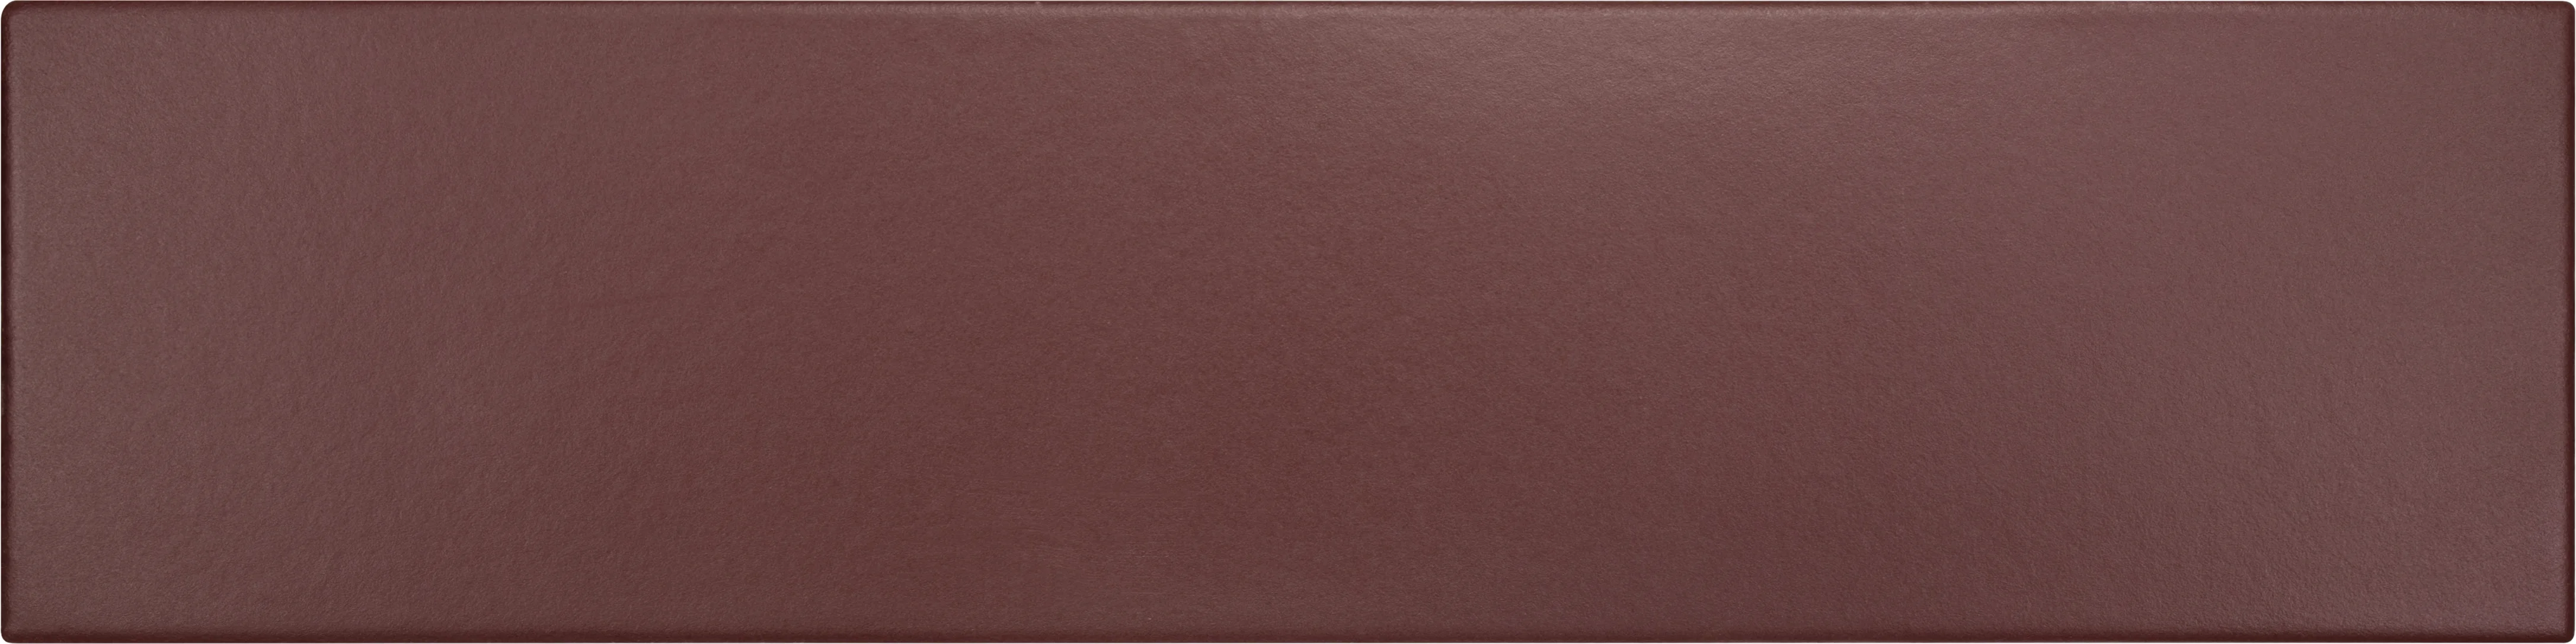 Equipe Stromboli Oxblood 9,2x36,8 cm 